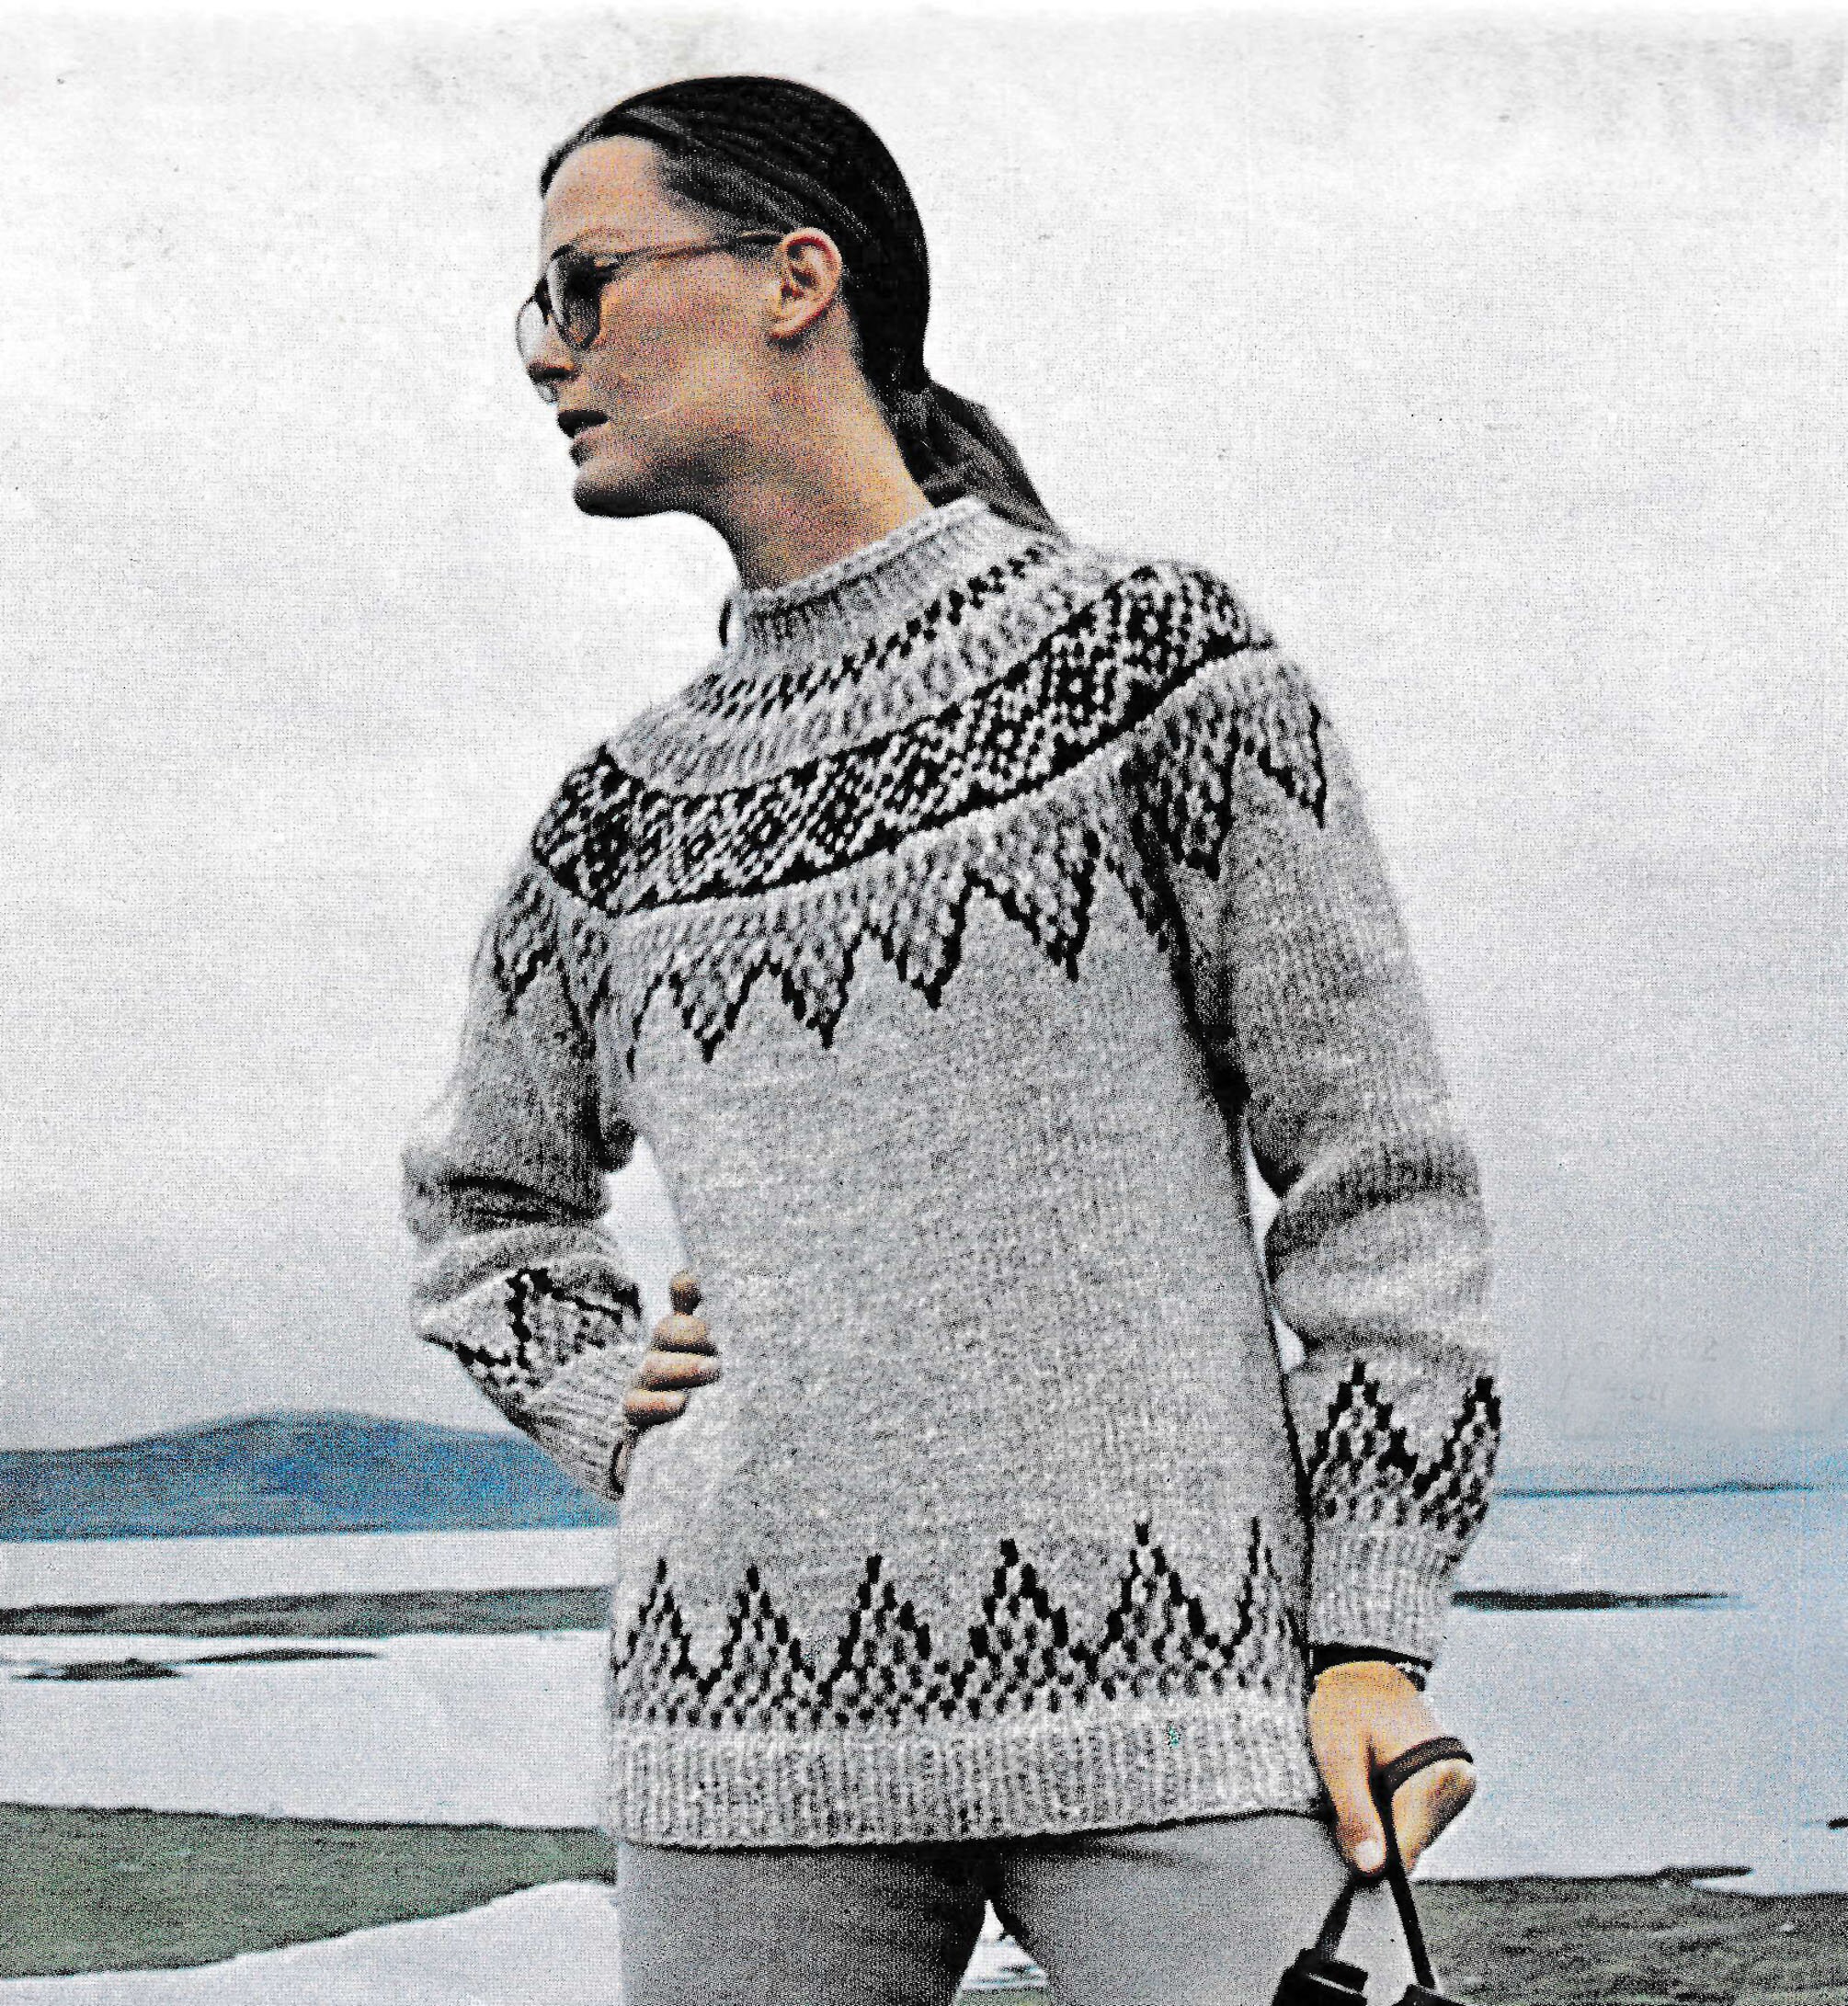 Cold Fish Round-yoke Sweater Knitting Pattern Instant Download PDF